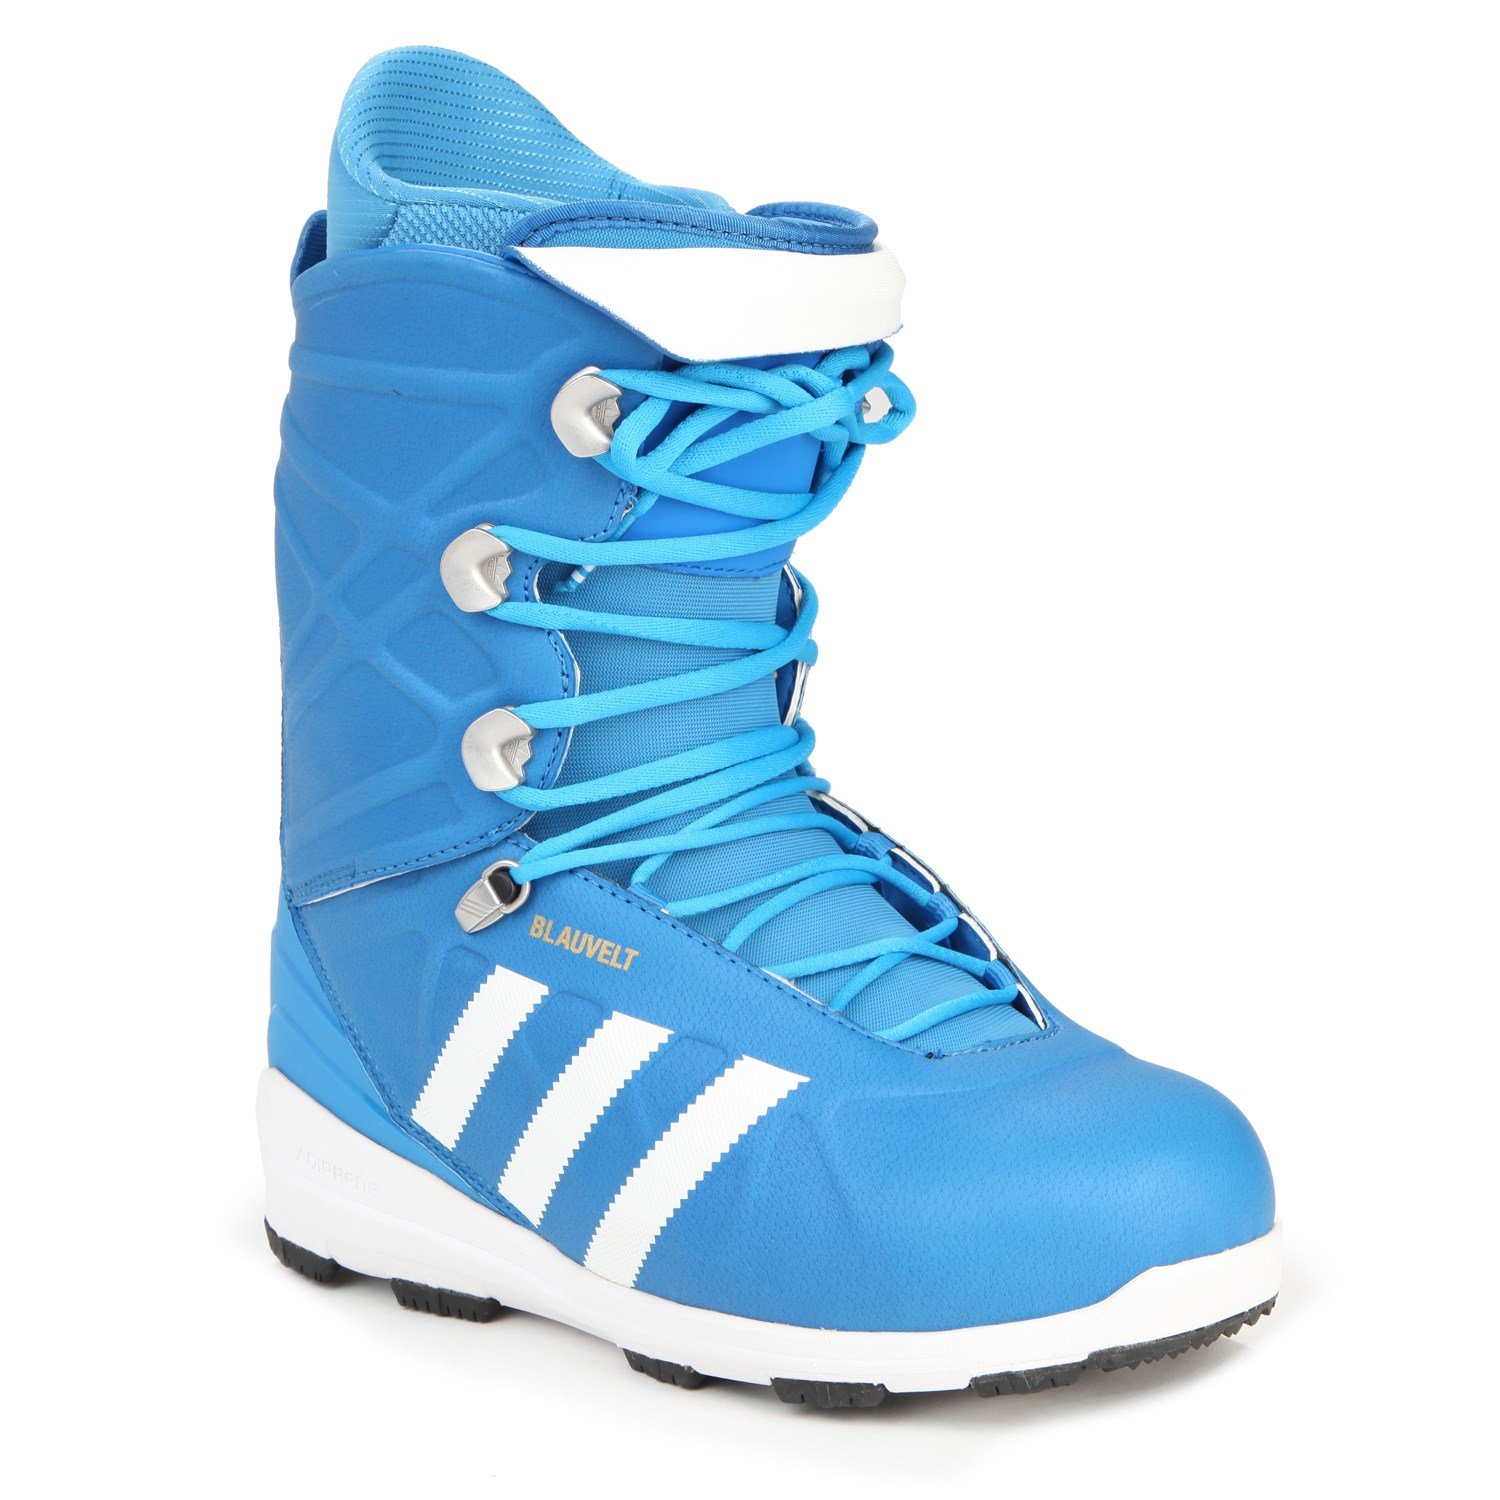 Adidas Blauvelt Snowboard Boots 2014 | evo